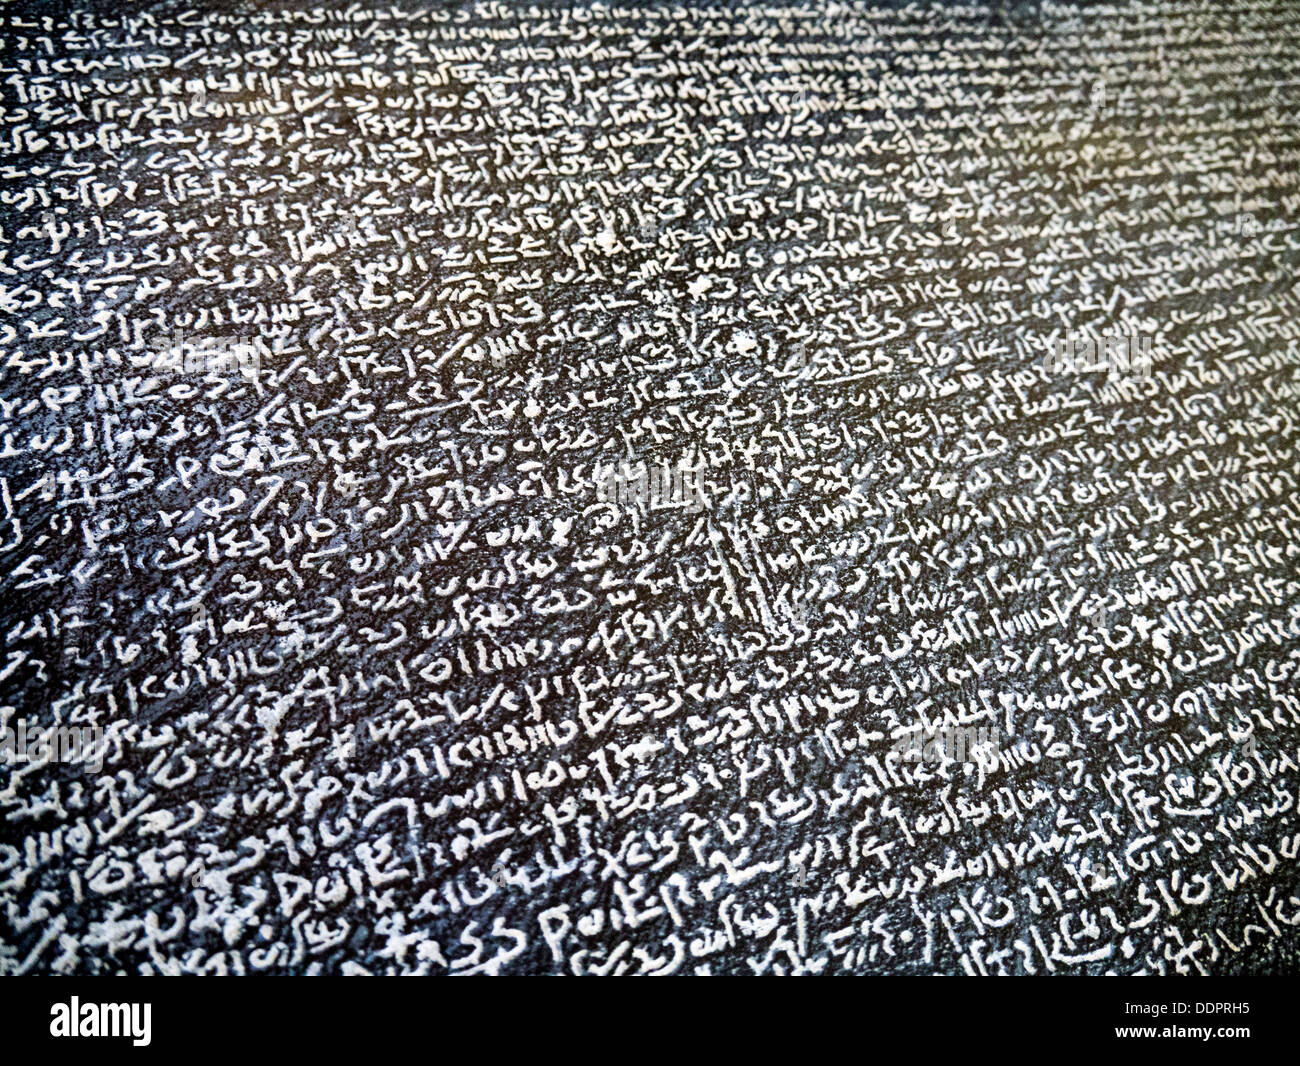 The Rosetta Stone script up close Stock Photo